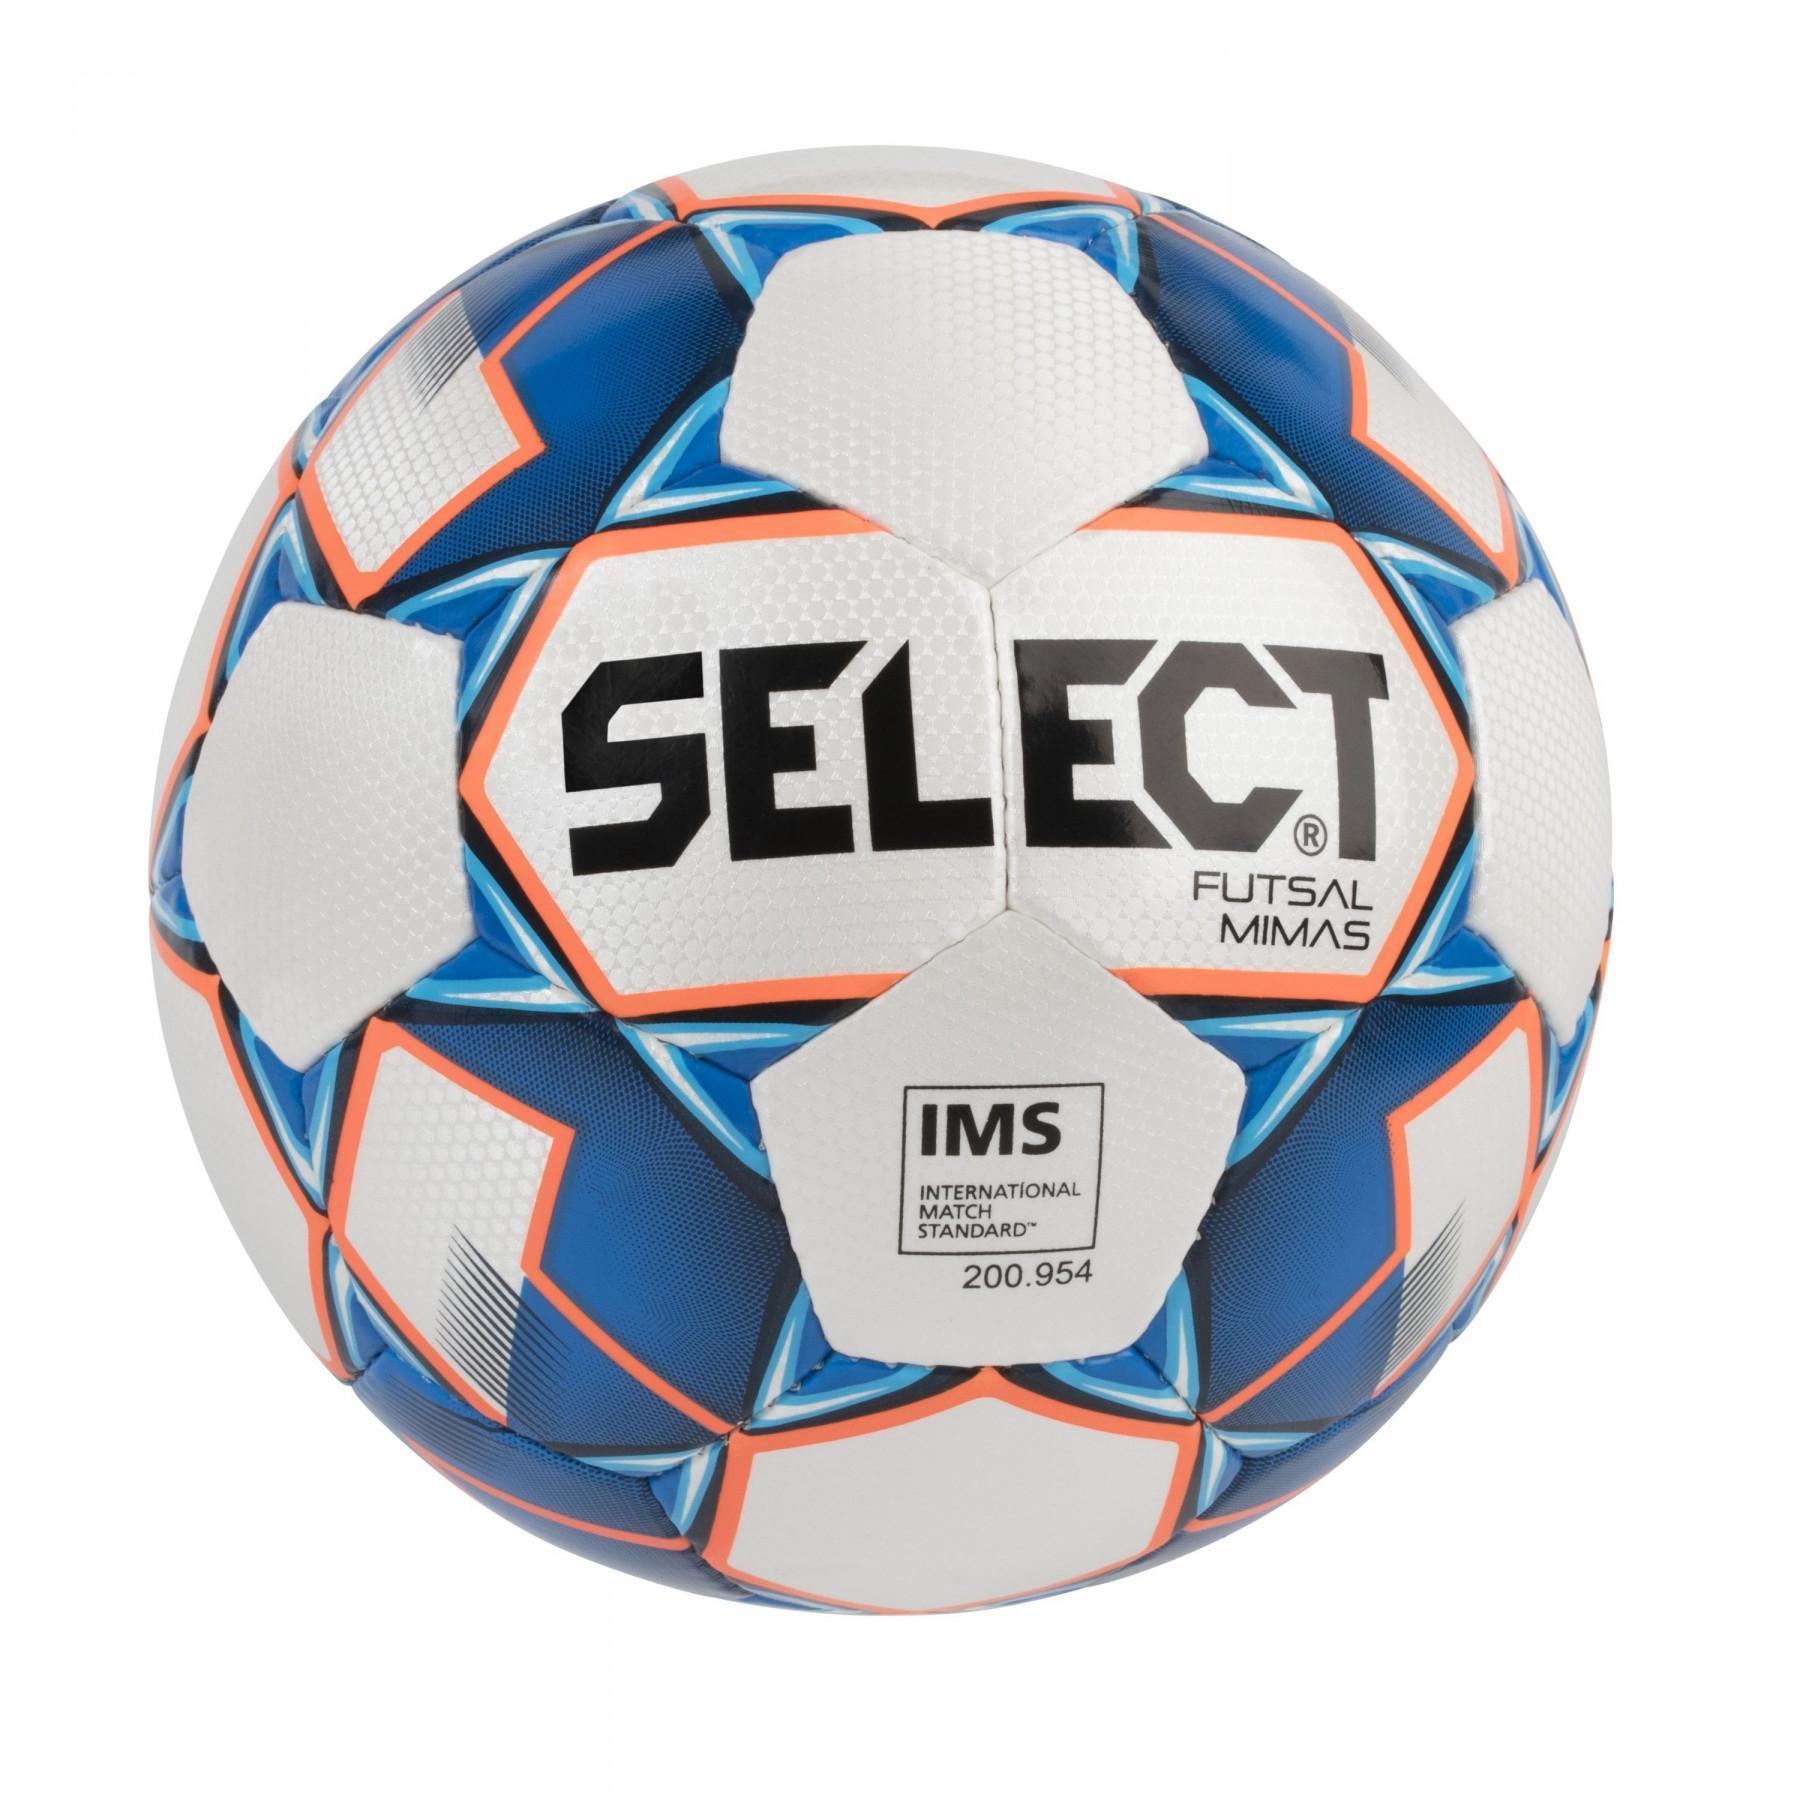 Balloon Select Futsal Mimas